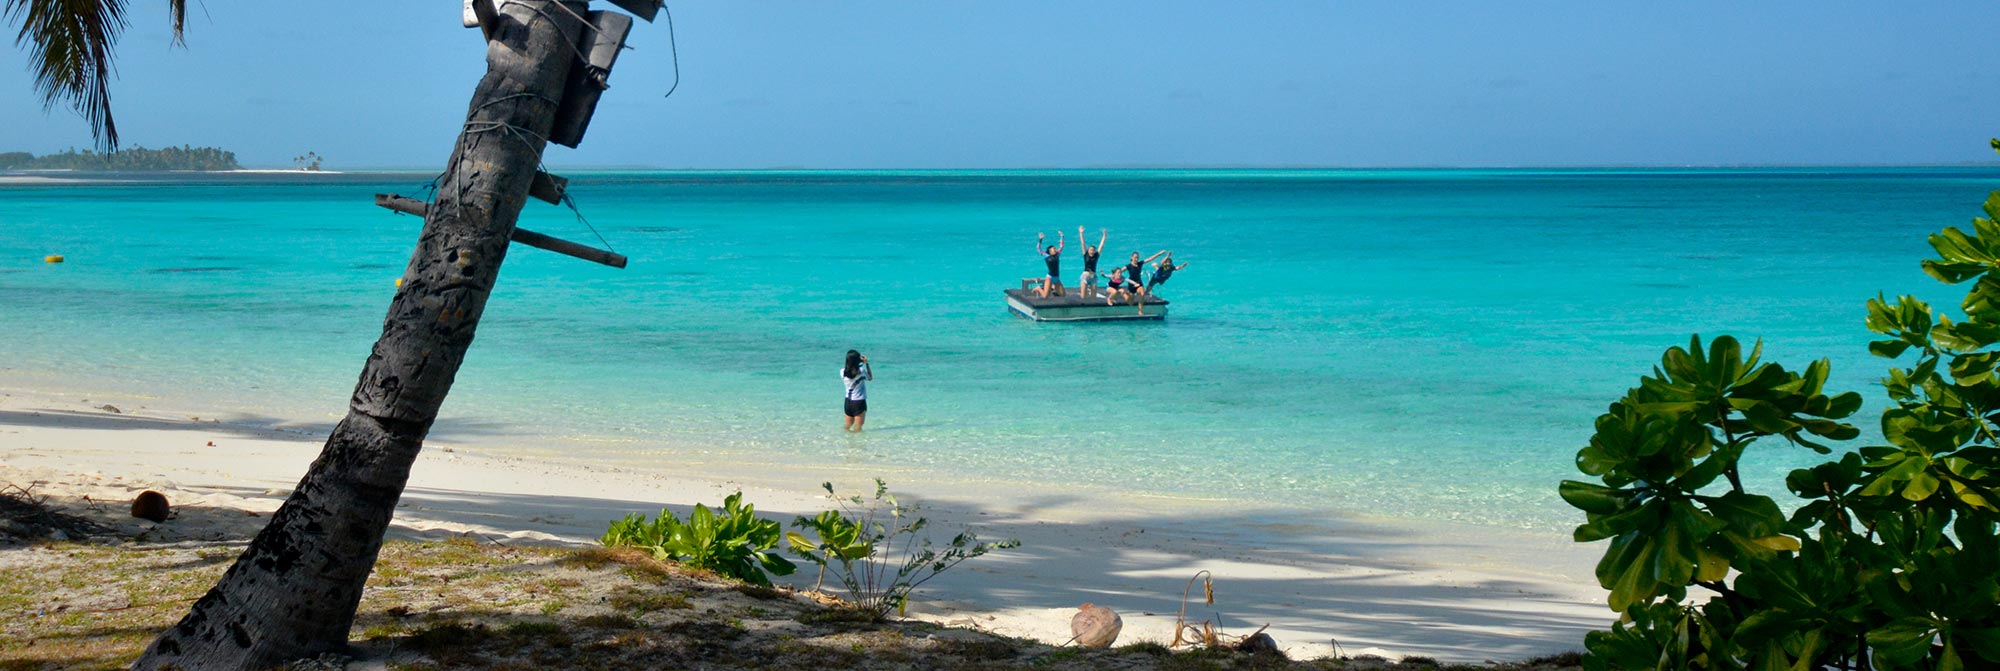 Cocos Islands - holiday Australia's Indian Ocean islands